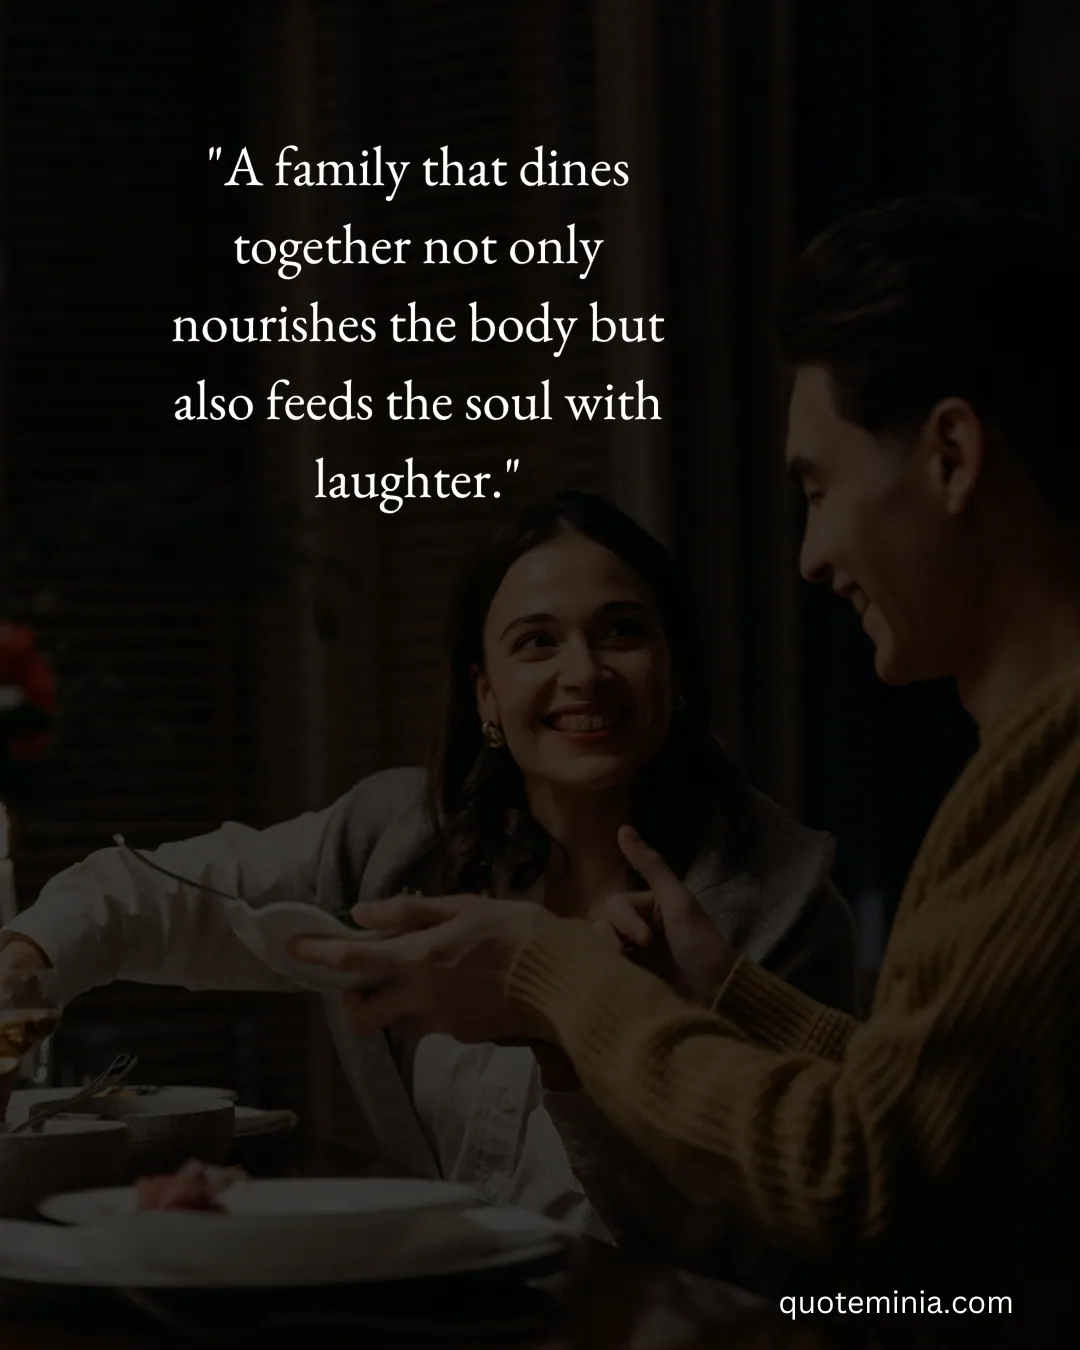 Happy Family Dinner Quotes 2